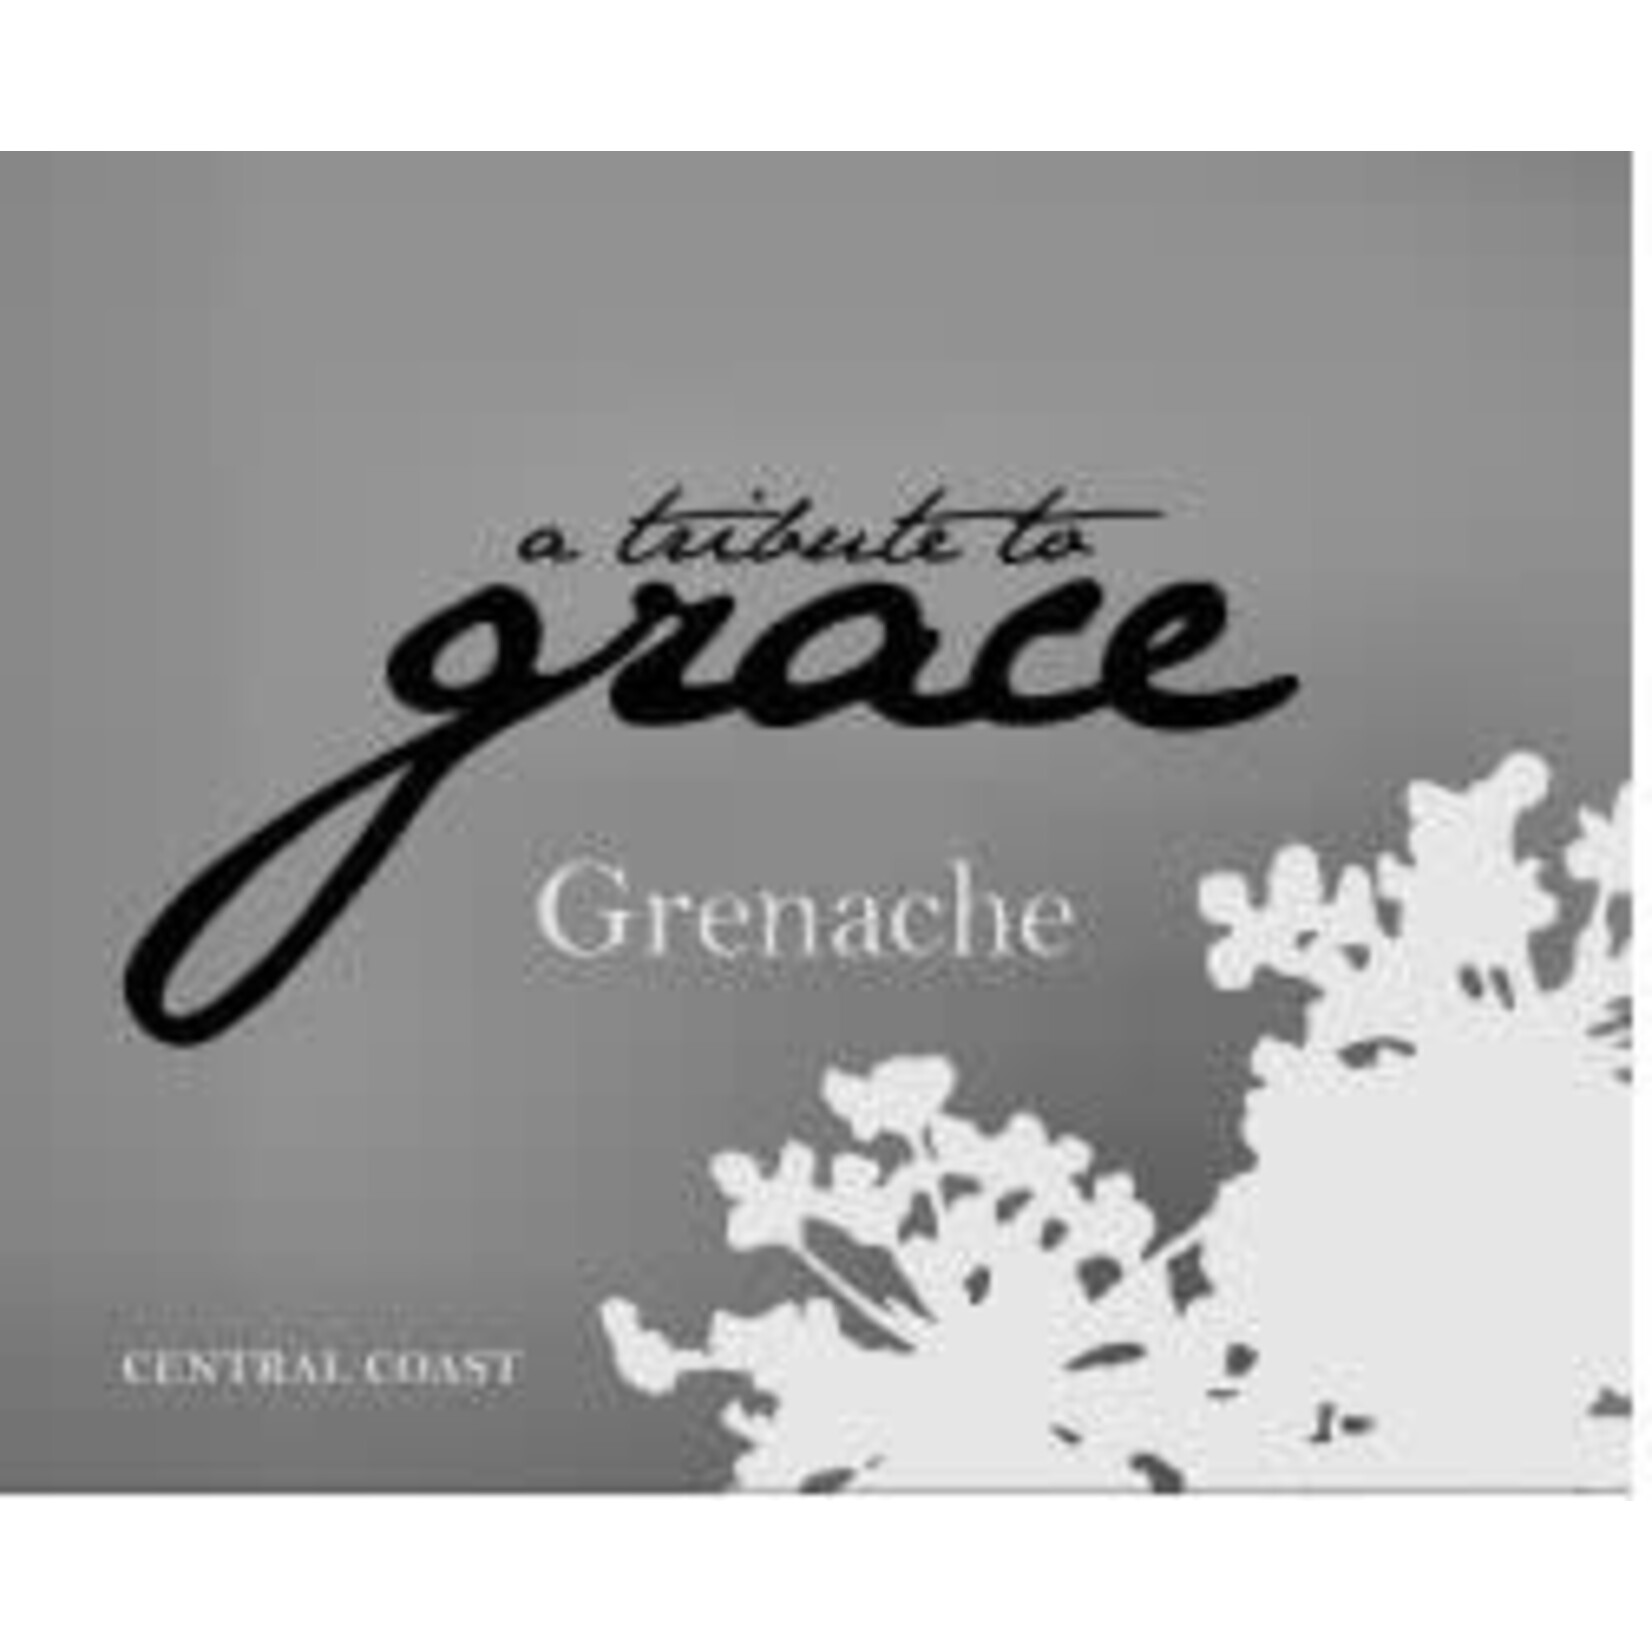 A Tribute to Grace Wine Co. A Tribute to Grace Grenache 2021 California (Annual Release)